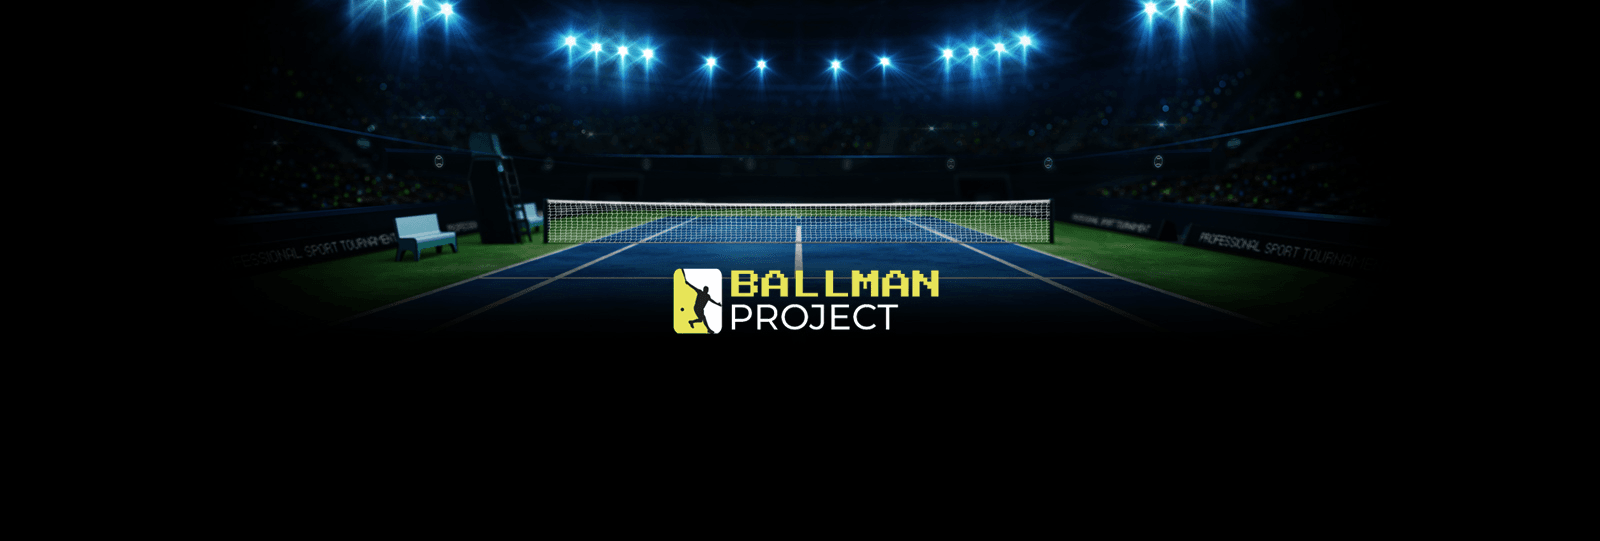 Ballman project